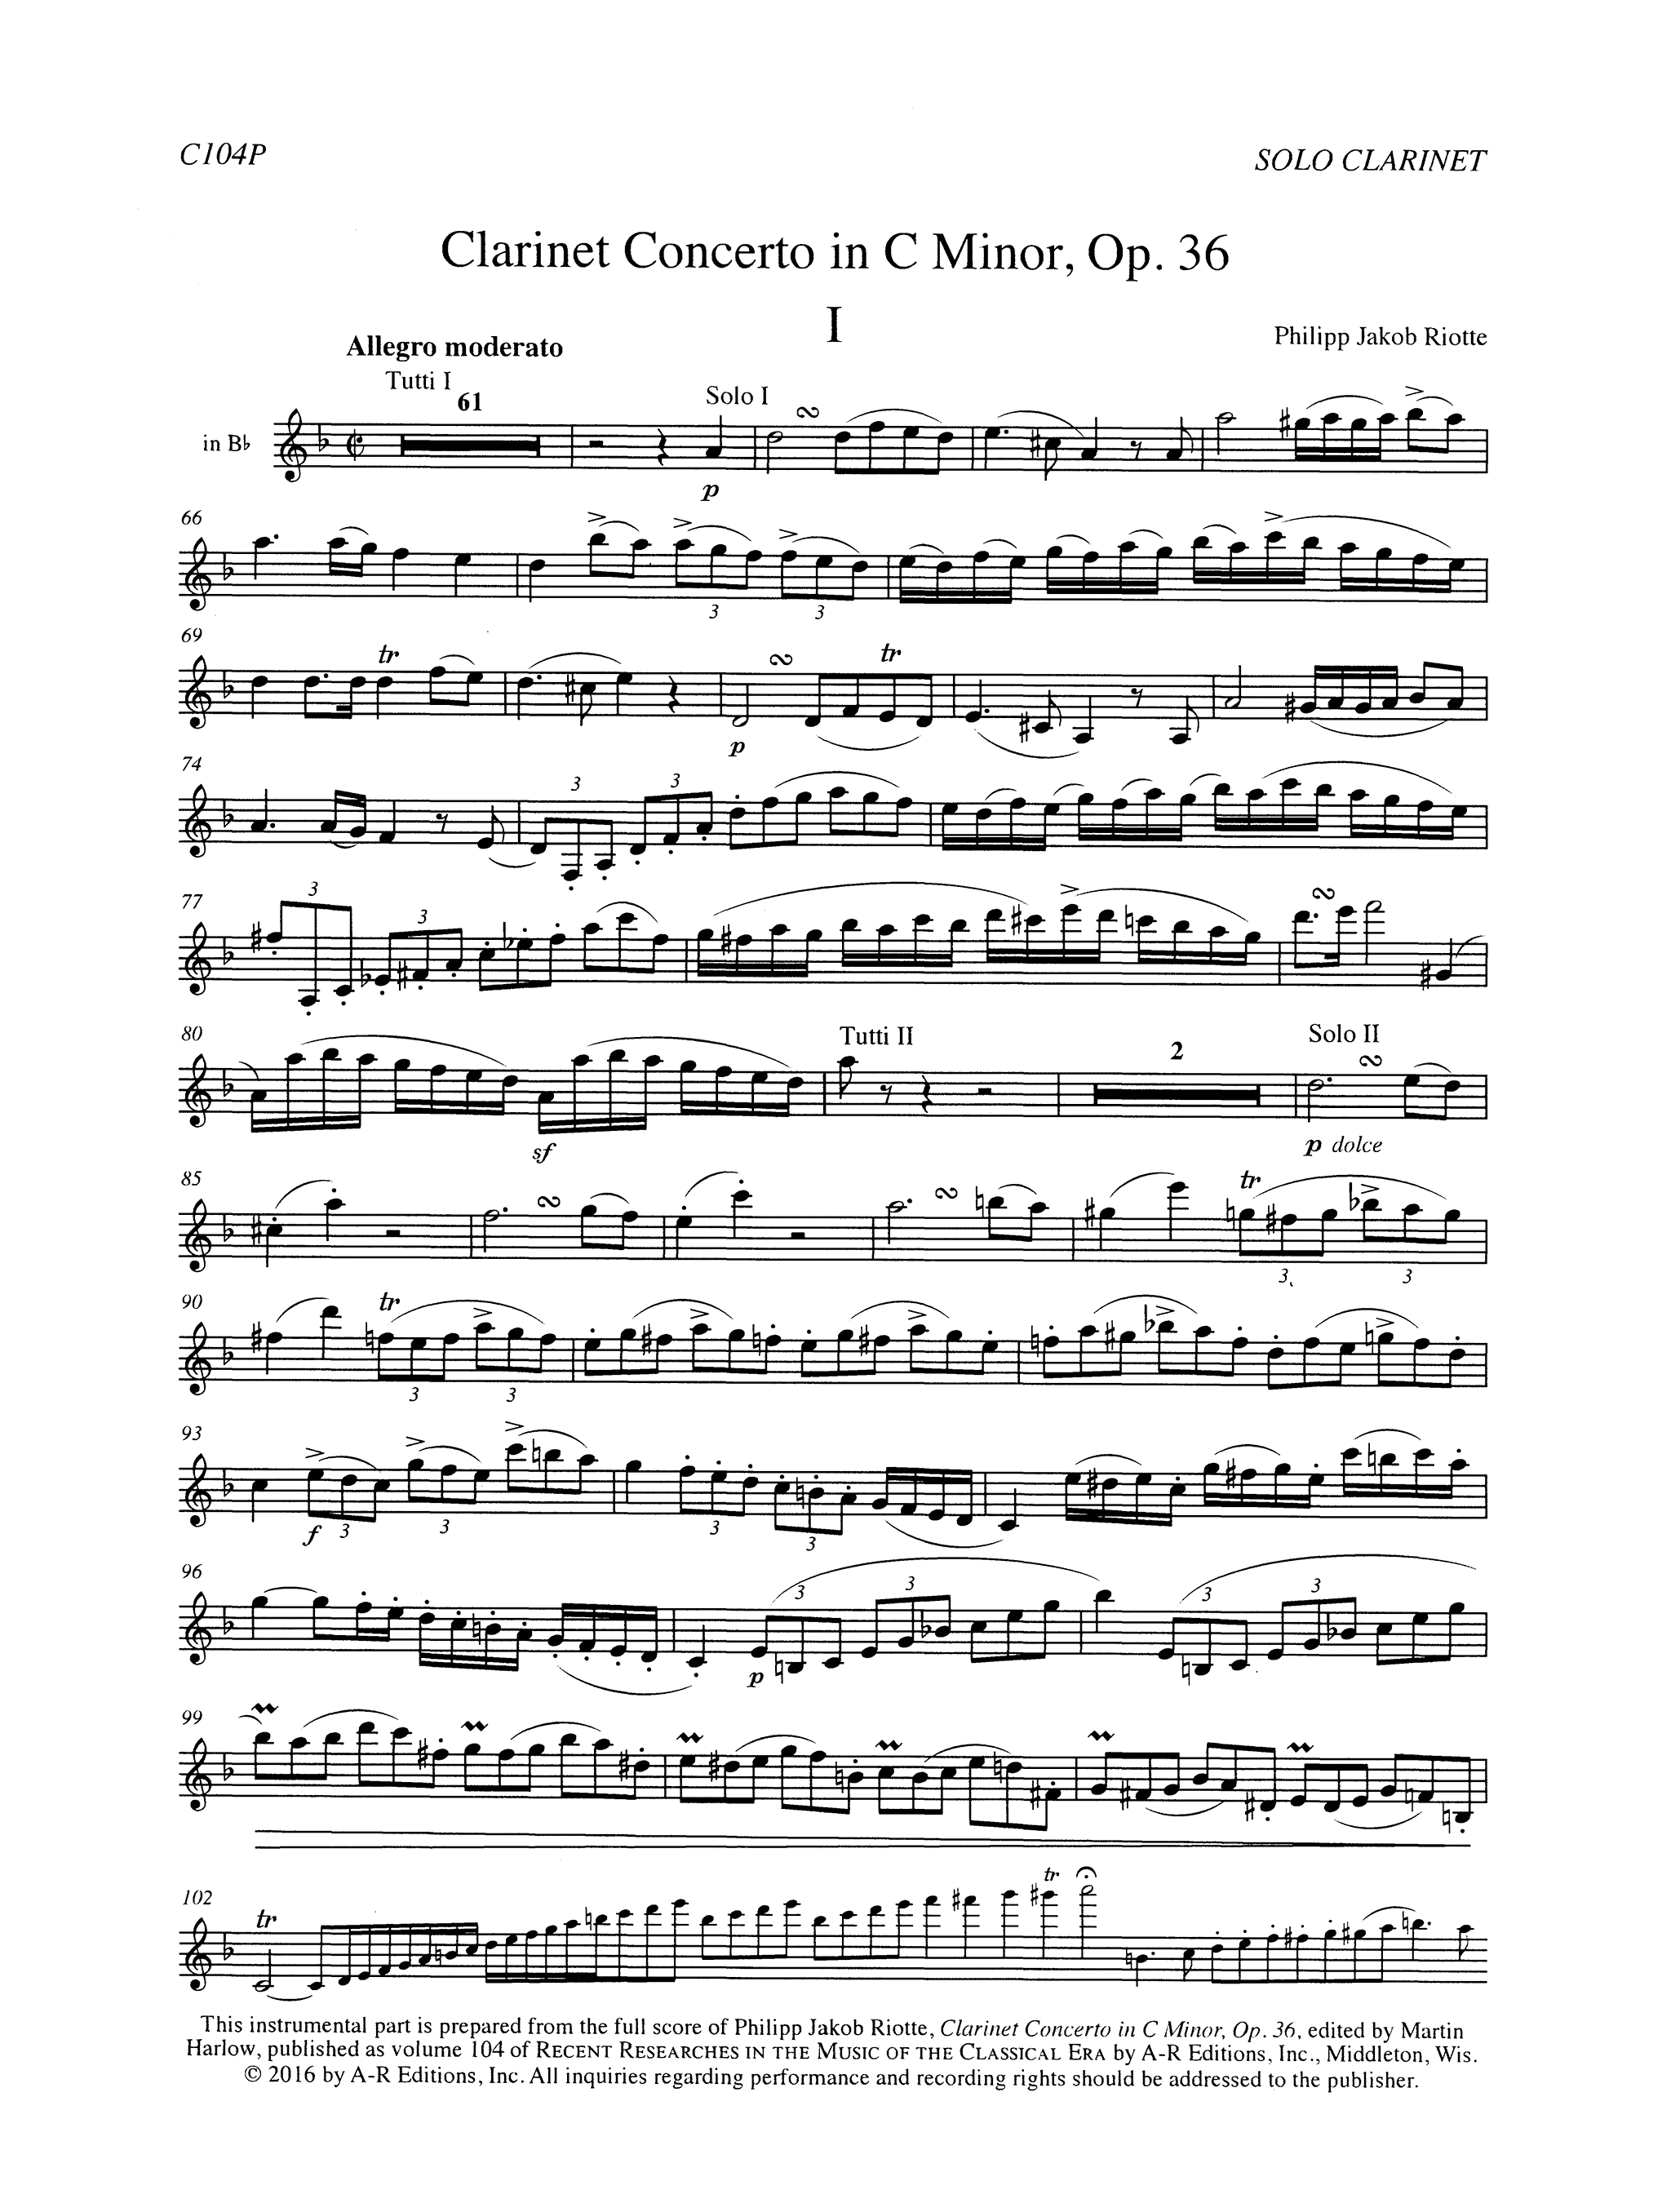 Philipp Jakob Riotte Clarinet Concerto in C Minor, Op. 36 - Movement 1